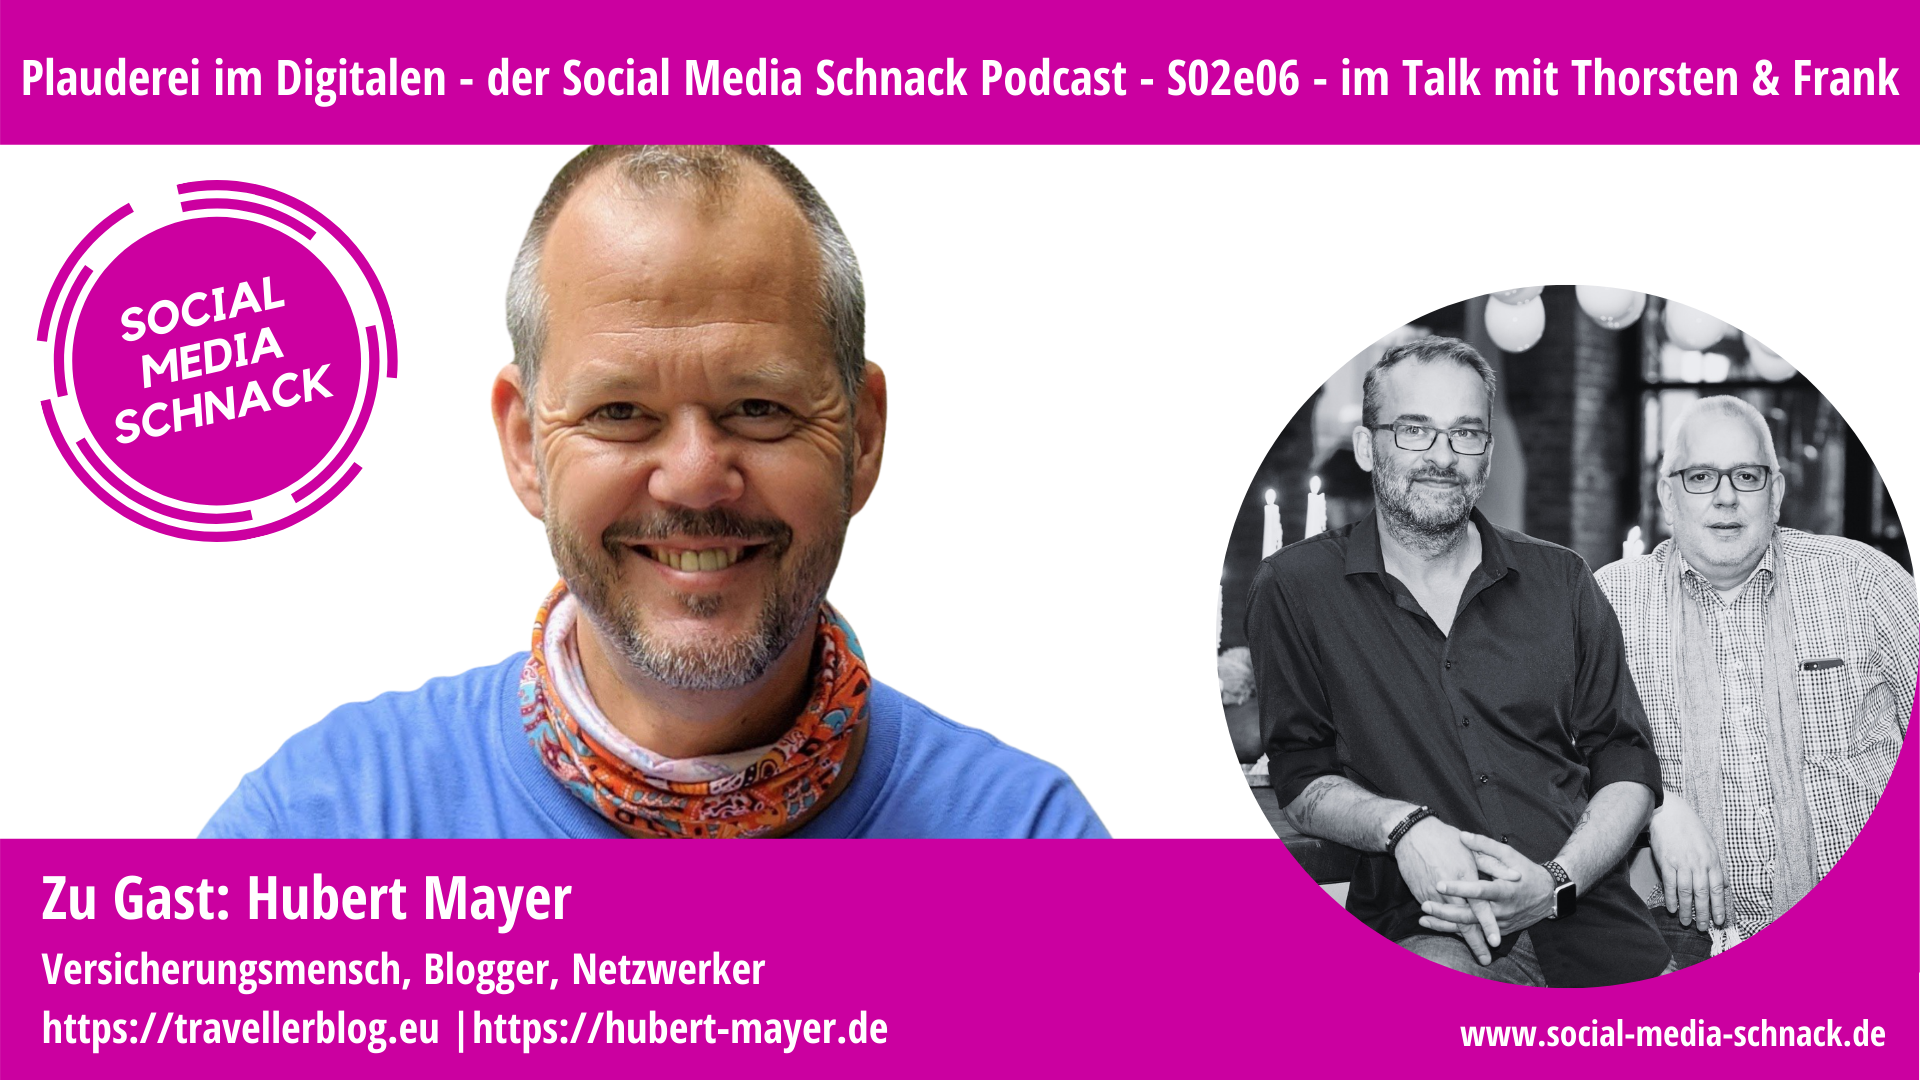 Social Media Schnack – S02e06 – Zu Gast: Hubert Mayer, Reiseblogger, travellerblog.eu